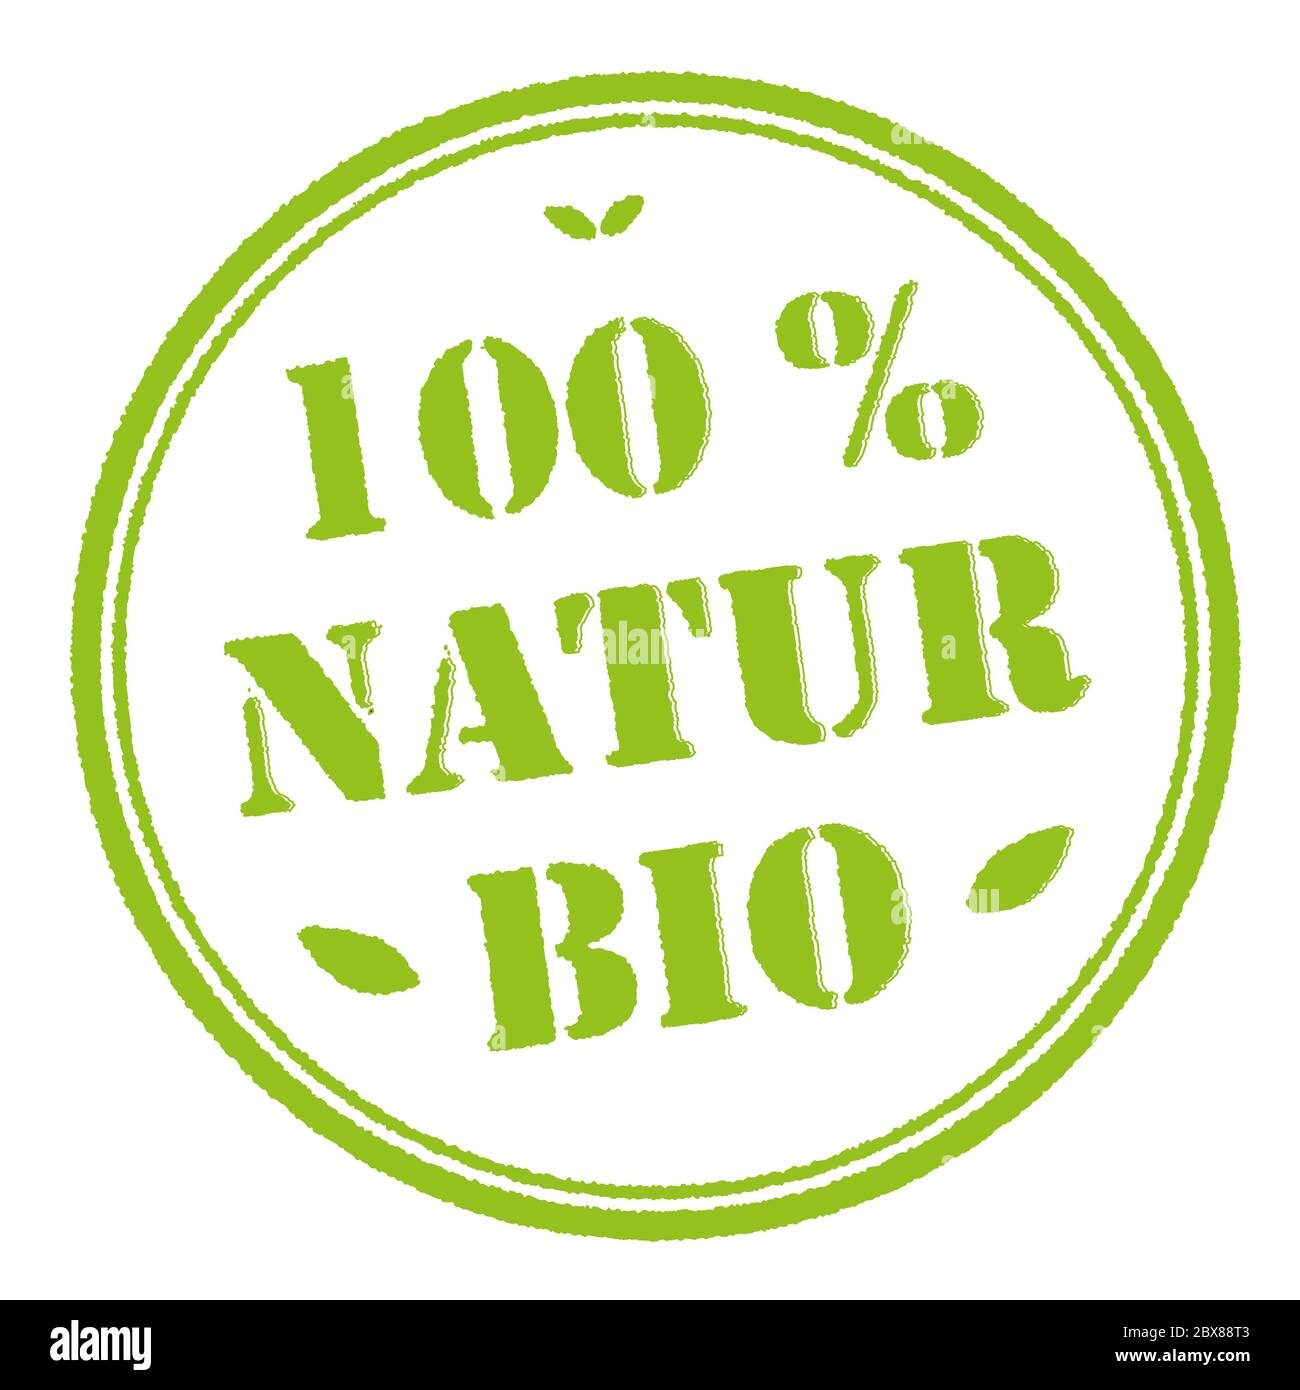 Green stamp 100% organic nature, illustration Stock Photo